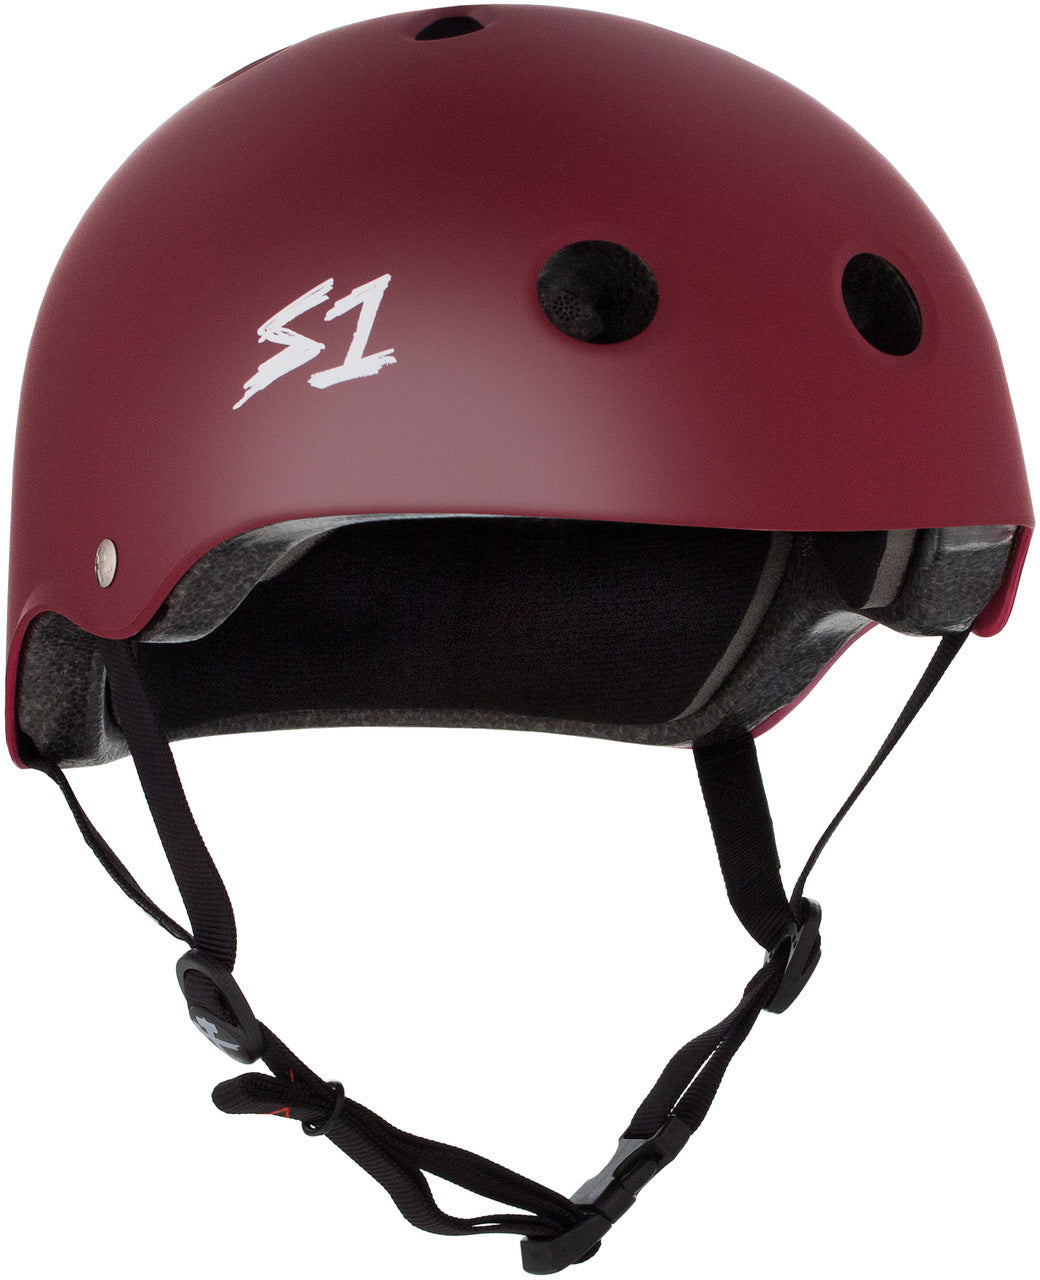 S1 Lifer Helmet Maroon Matte